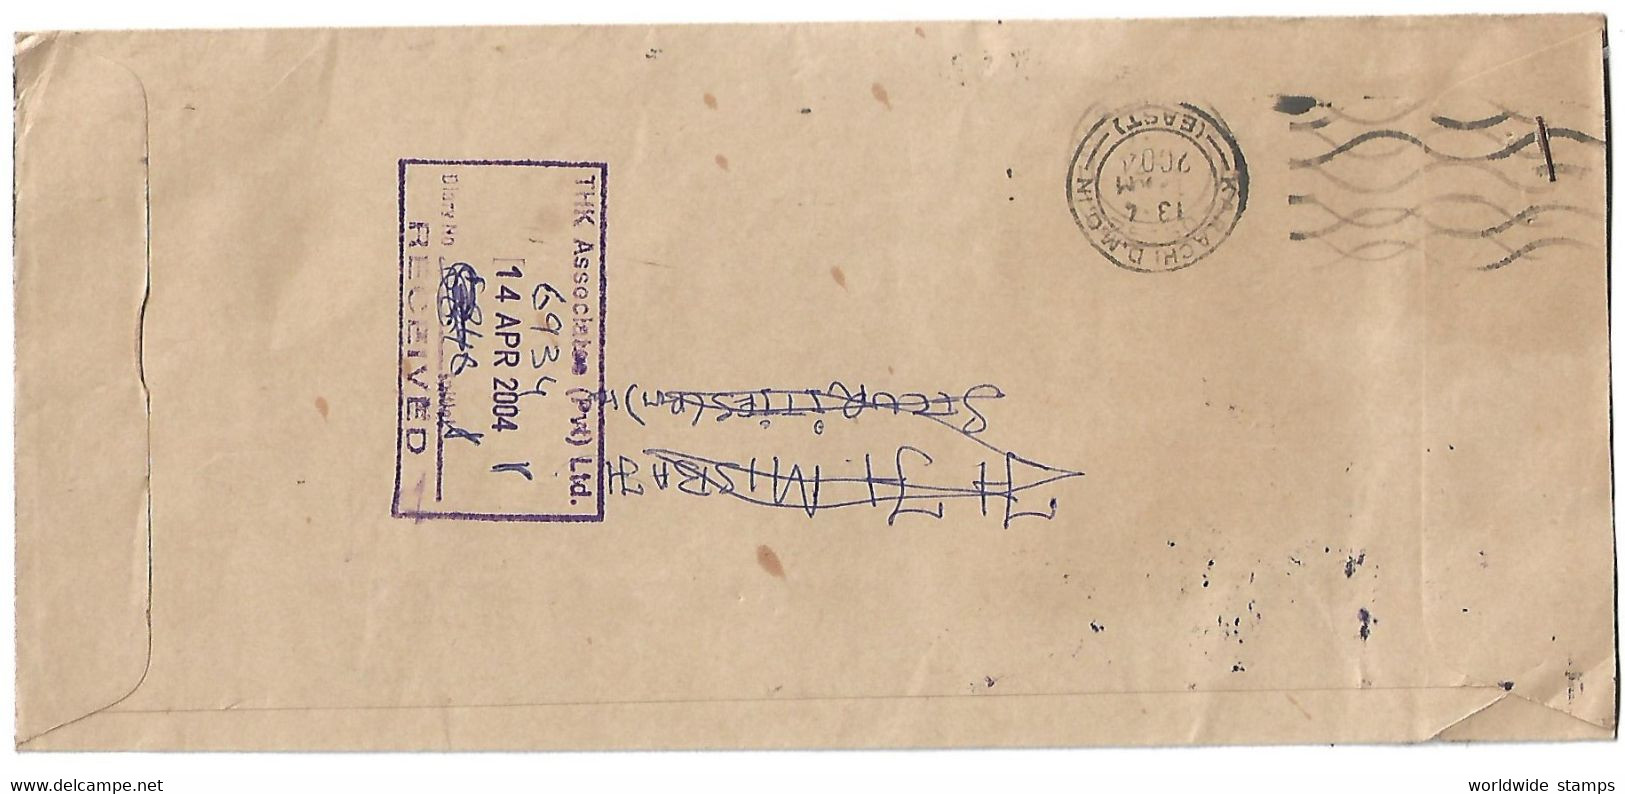 Bahrain Registered Airmail 2002 Shaikh Hamad Bin Isa Al Khalifa 200f , Charity Stamp Postal History Cover National Guard - Bahrein (1965-...)